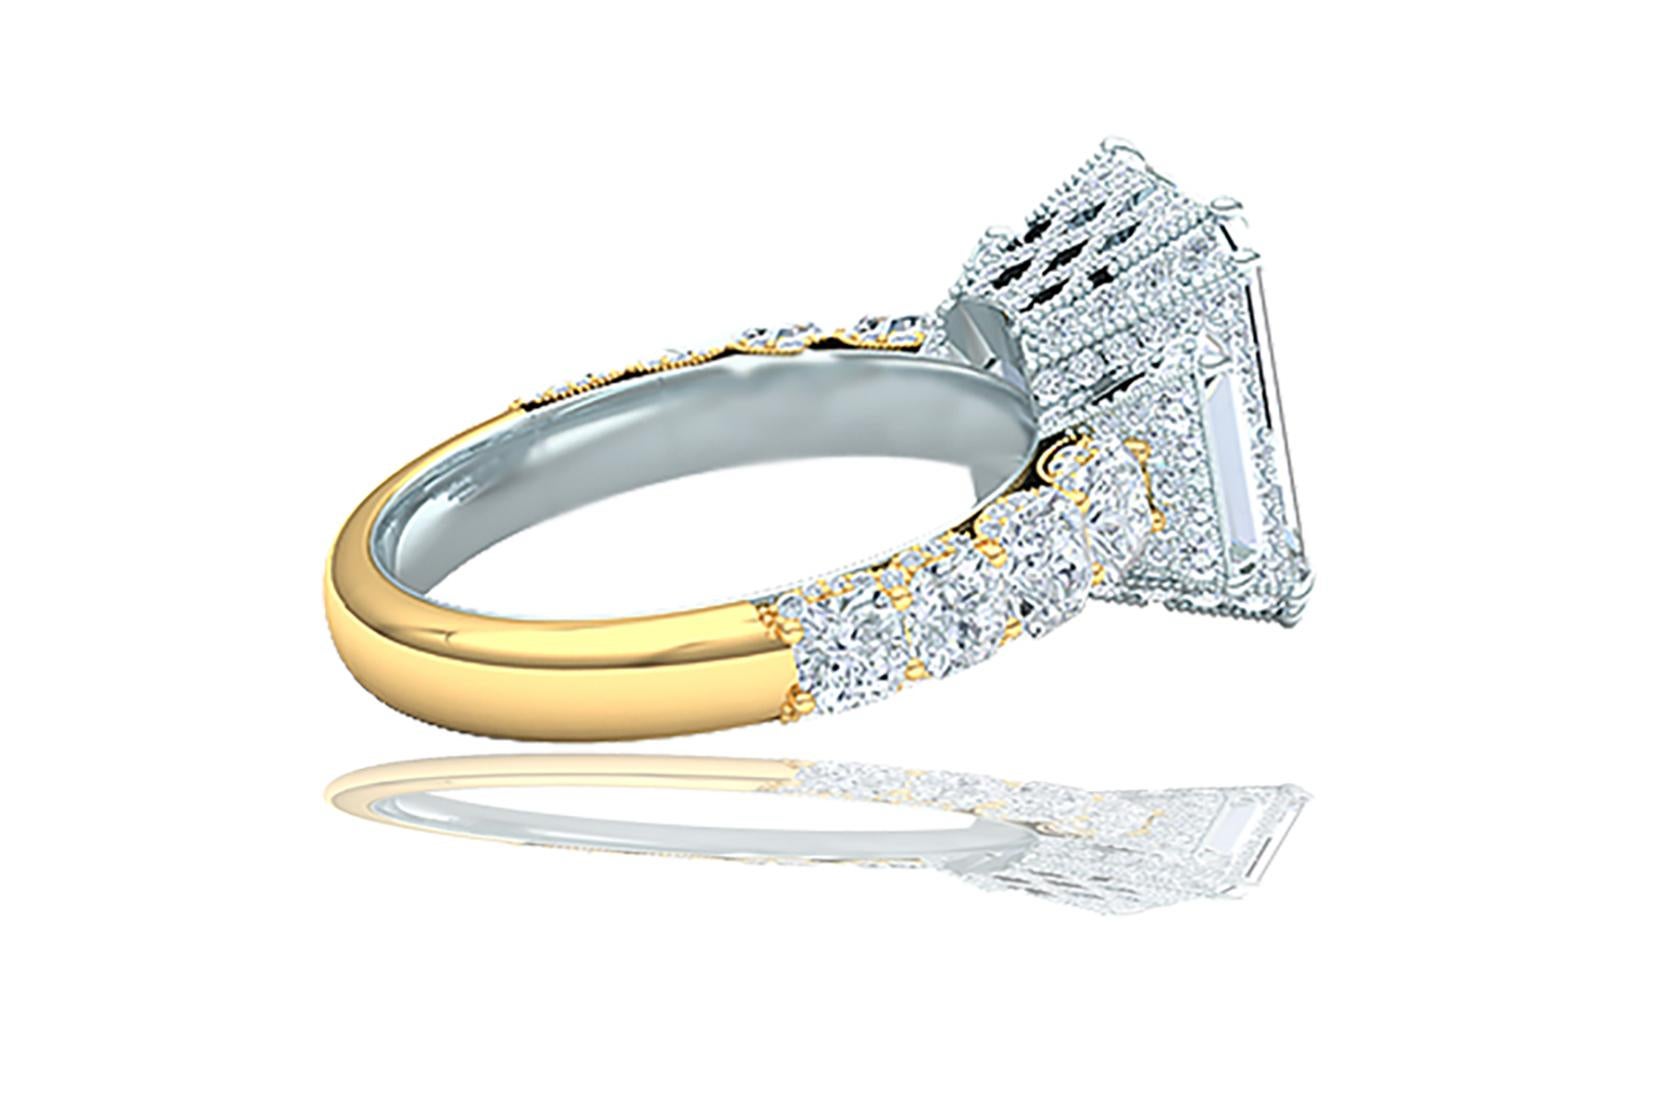 4 carat diamond ring